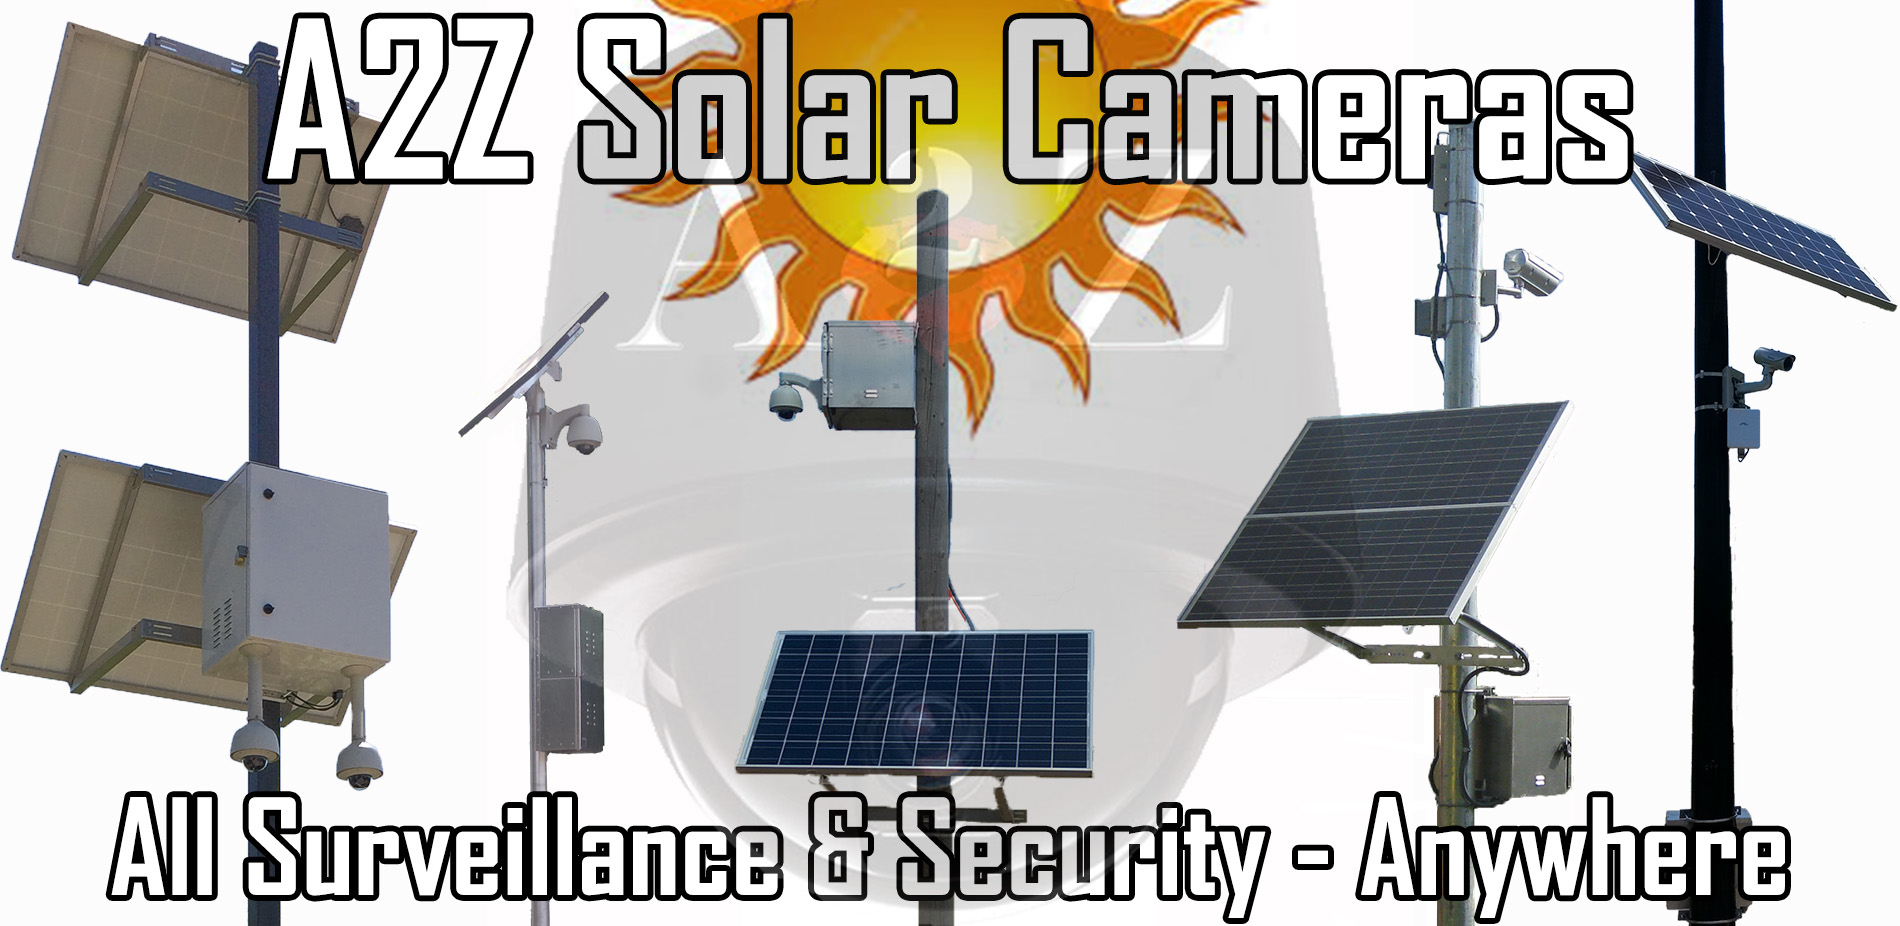 a2z-ss-solar-cameras-systems-banner.jpg